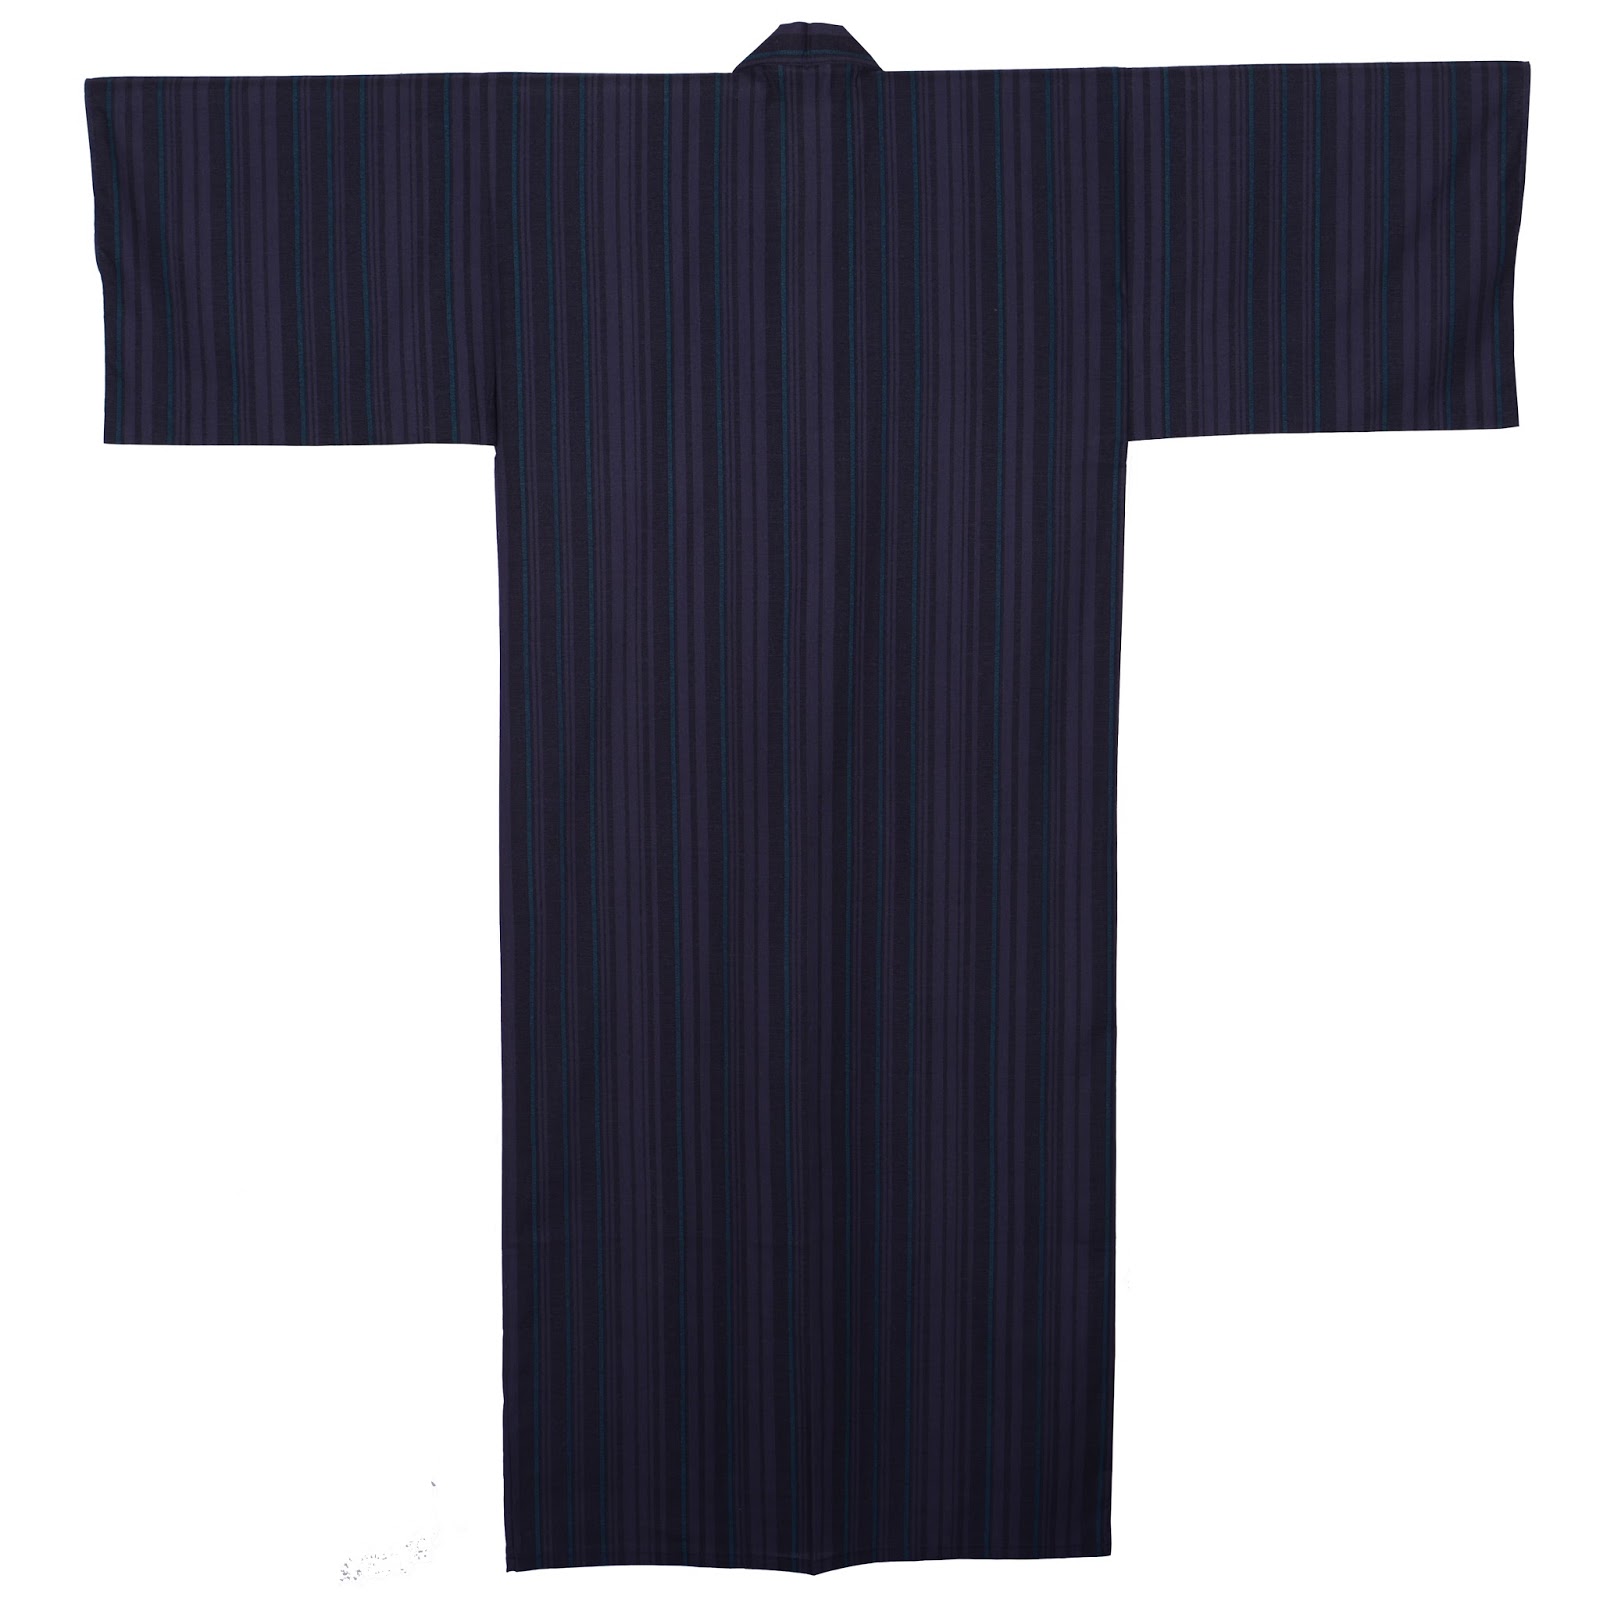 Japanya: Japanese Kimono Tateshima Striped Gown now available in Navy